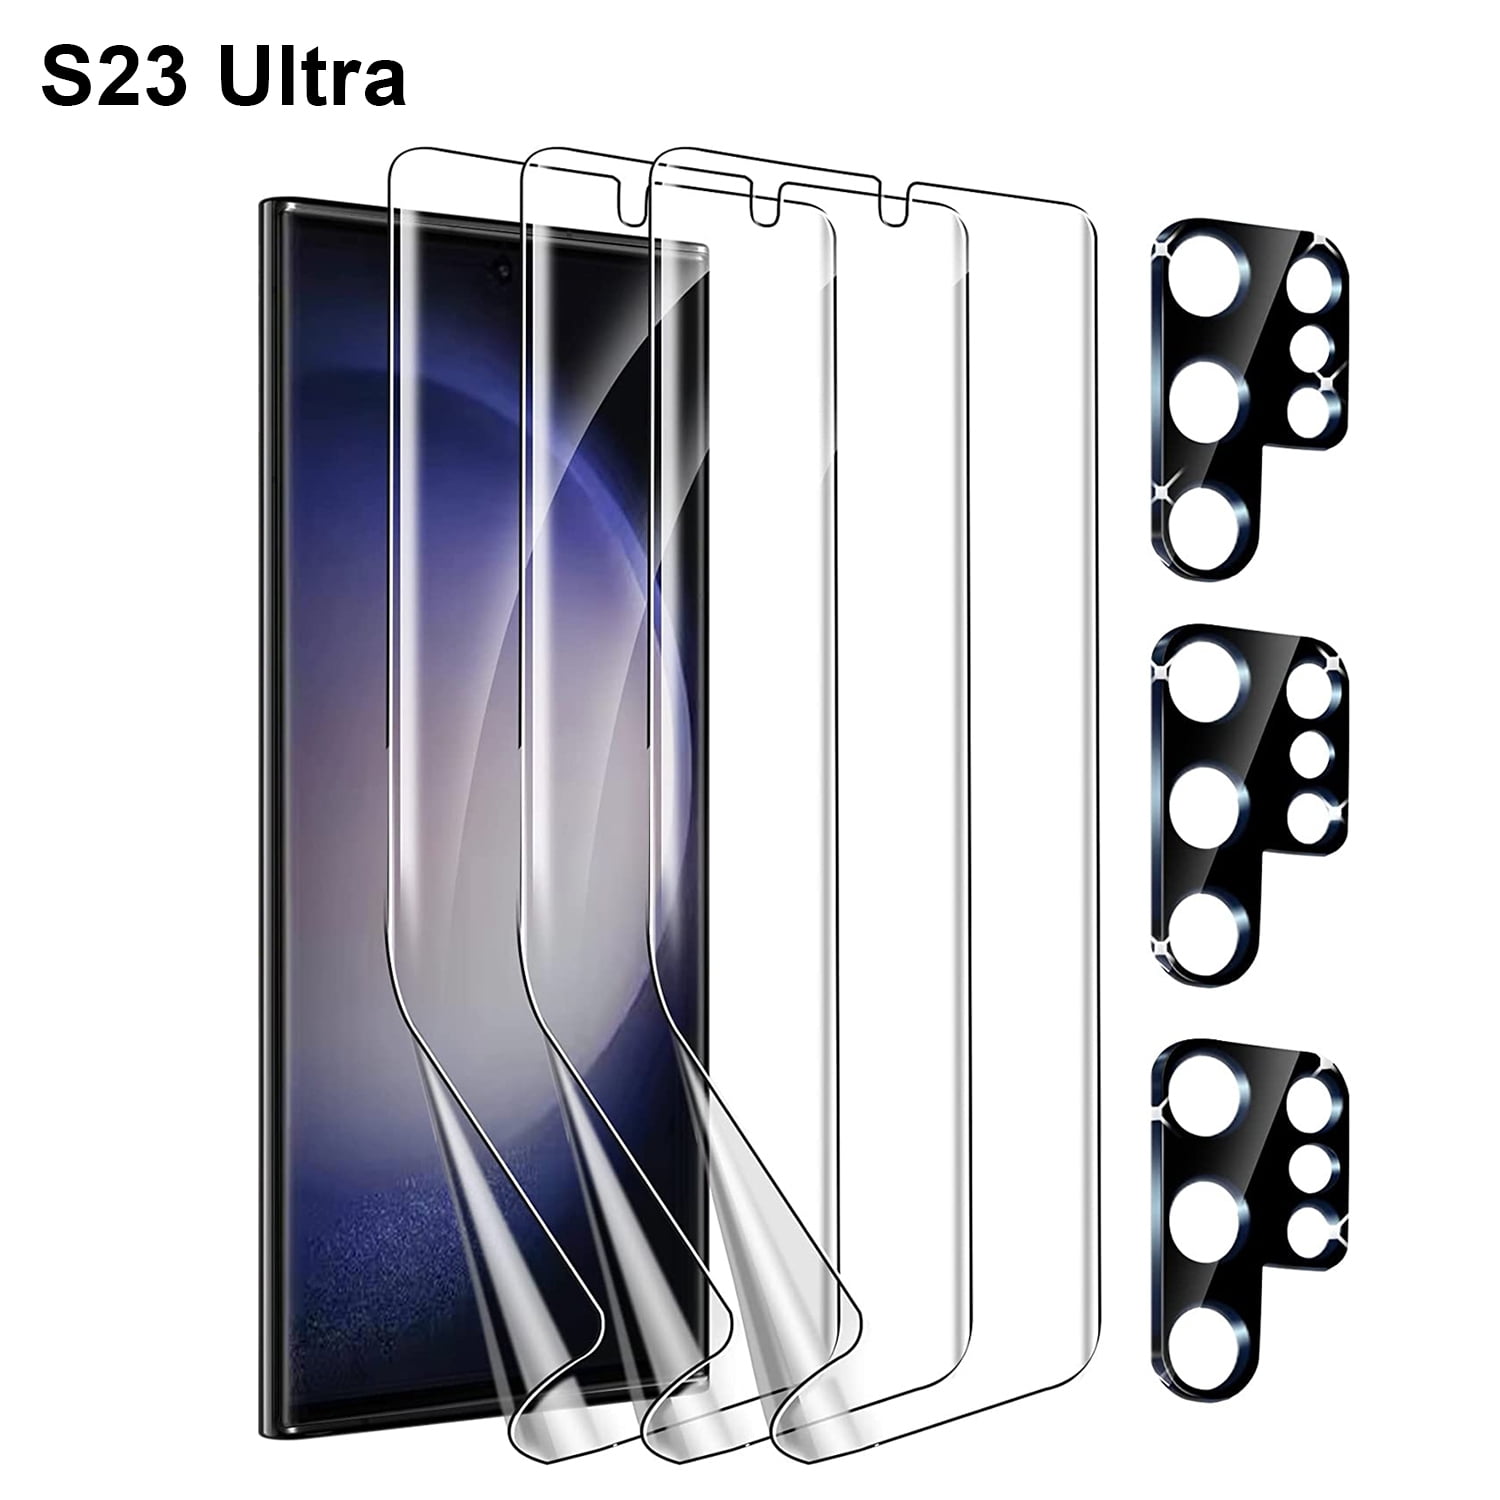 Galaxy S23 Ultra screen protector